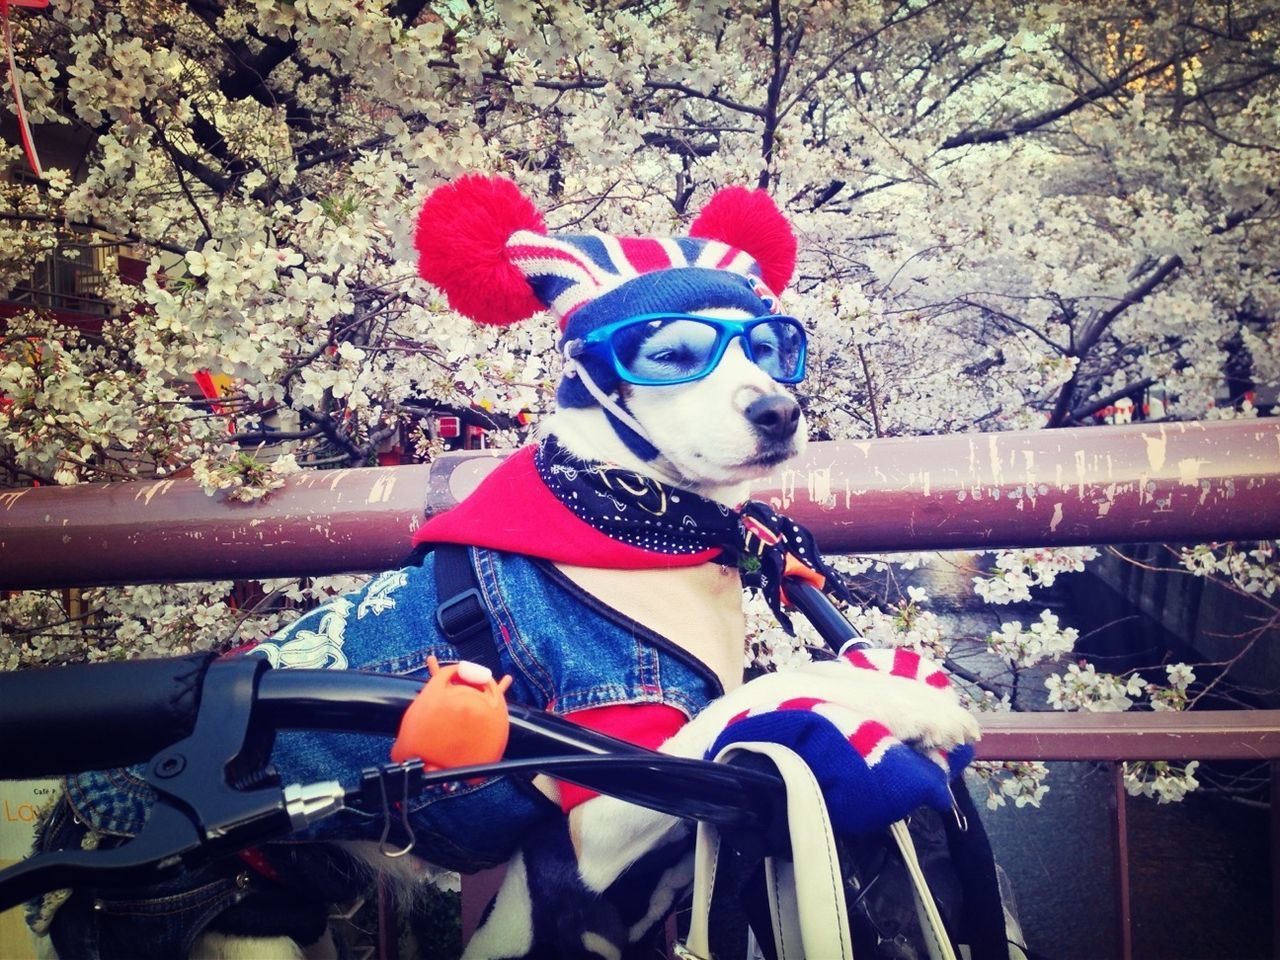 Dog wearing funny costume sitting on bike